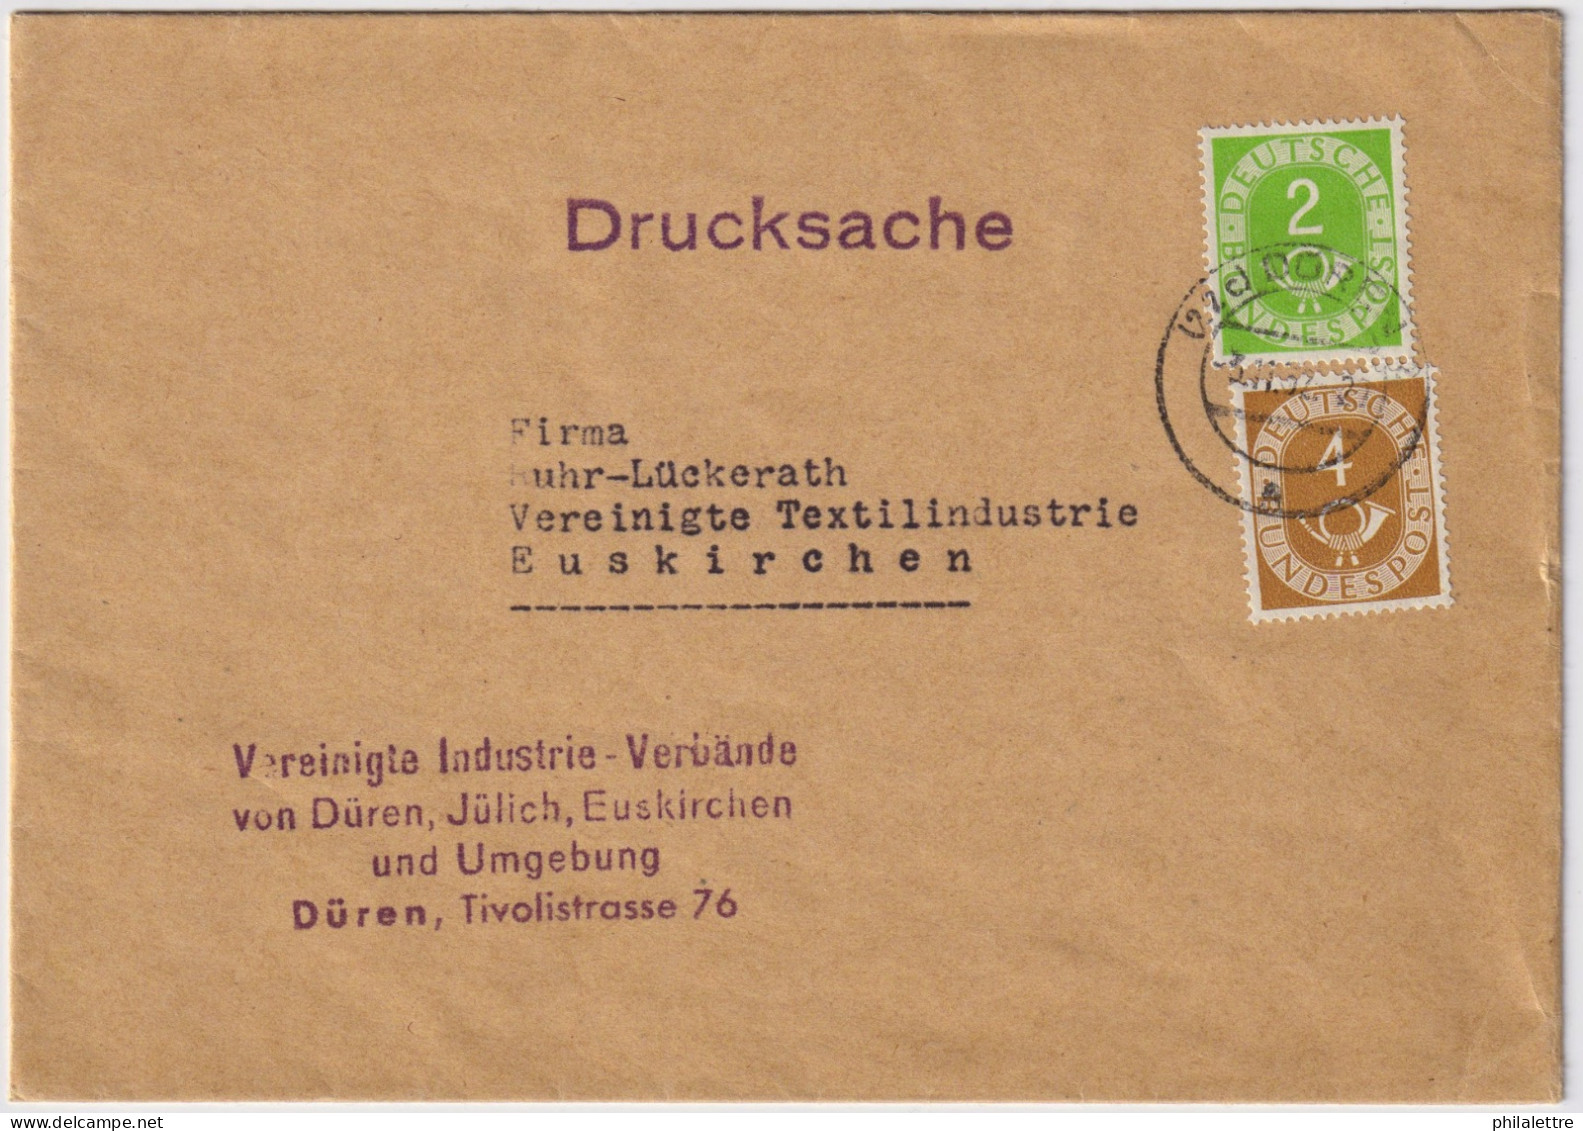 ALLEMAGNE / GERMANY - 1953 - Mi.123 & Mi.124 2pf. & 4pf. On Printed Matters (Drucksache) Cover From Düren To Euskirchen - Cartas & Documentos